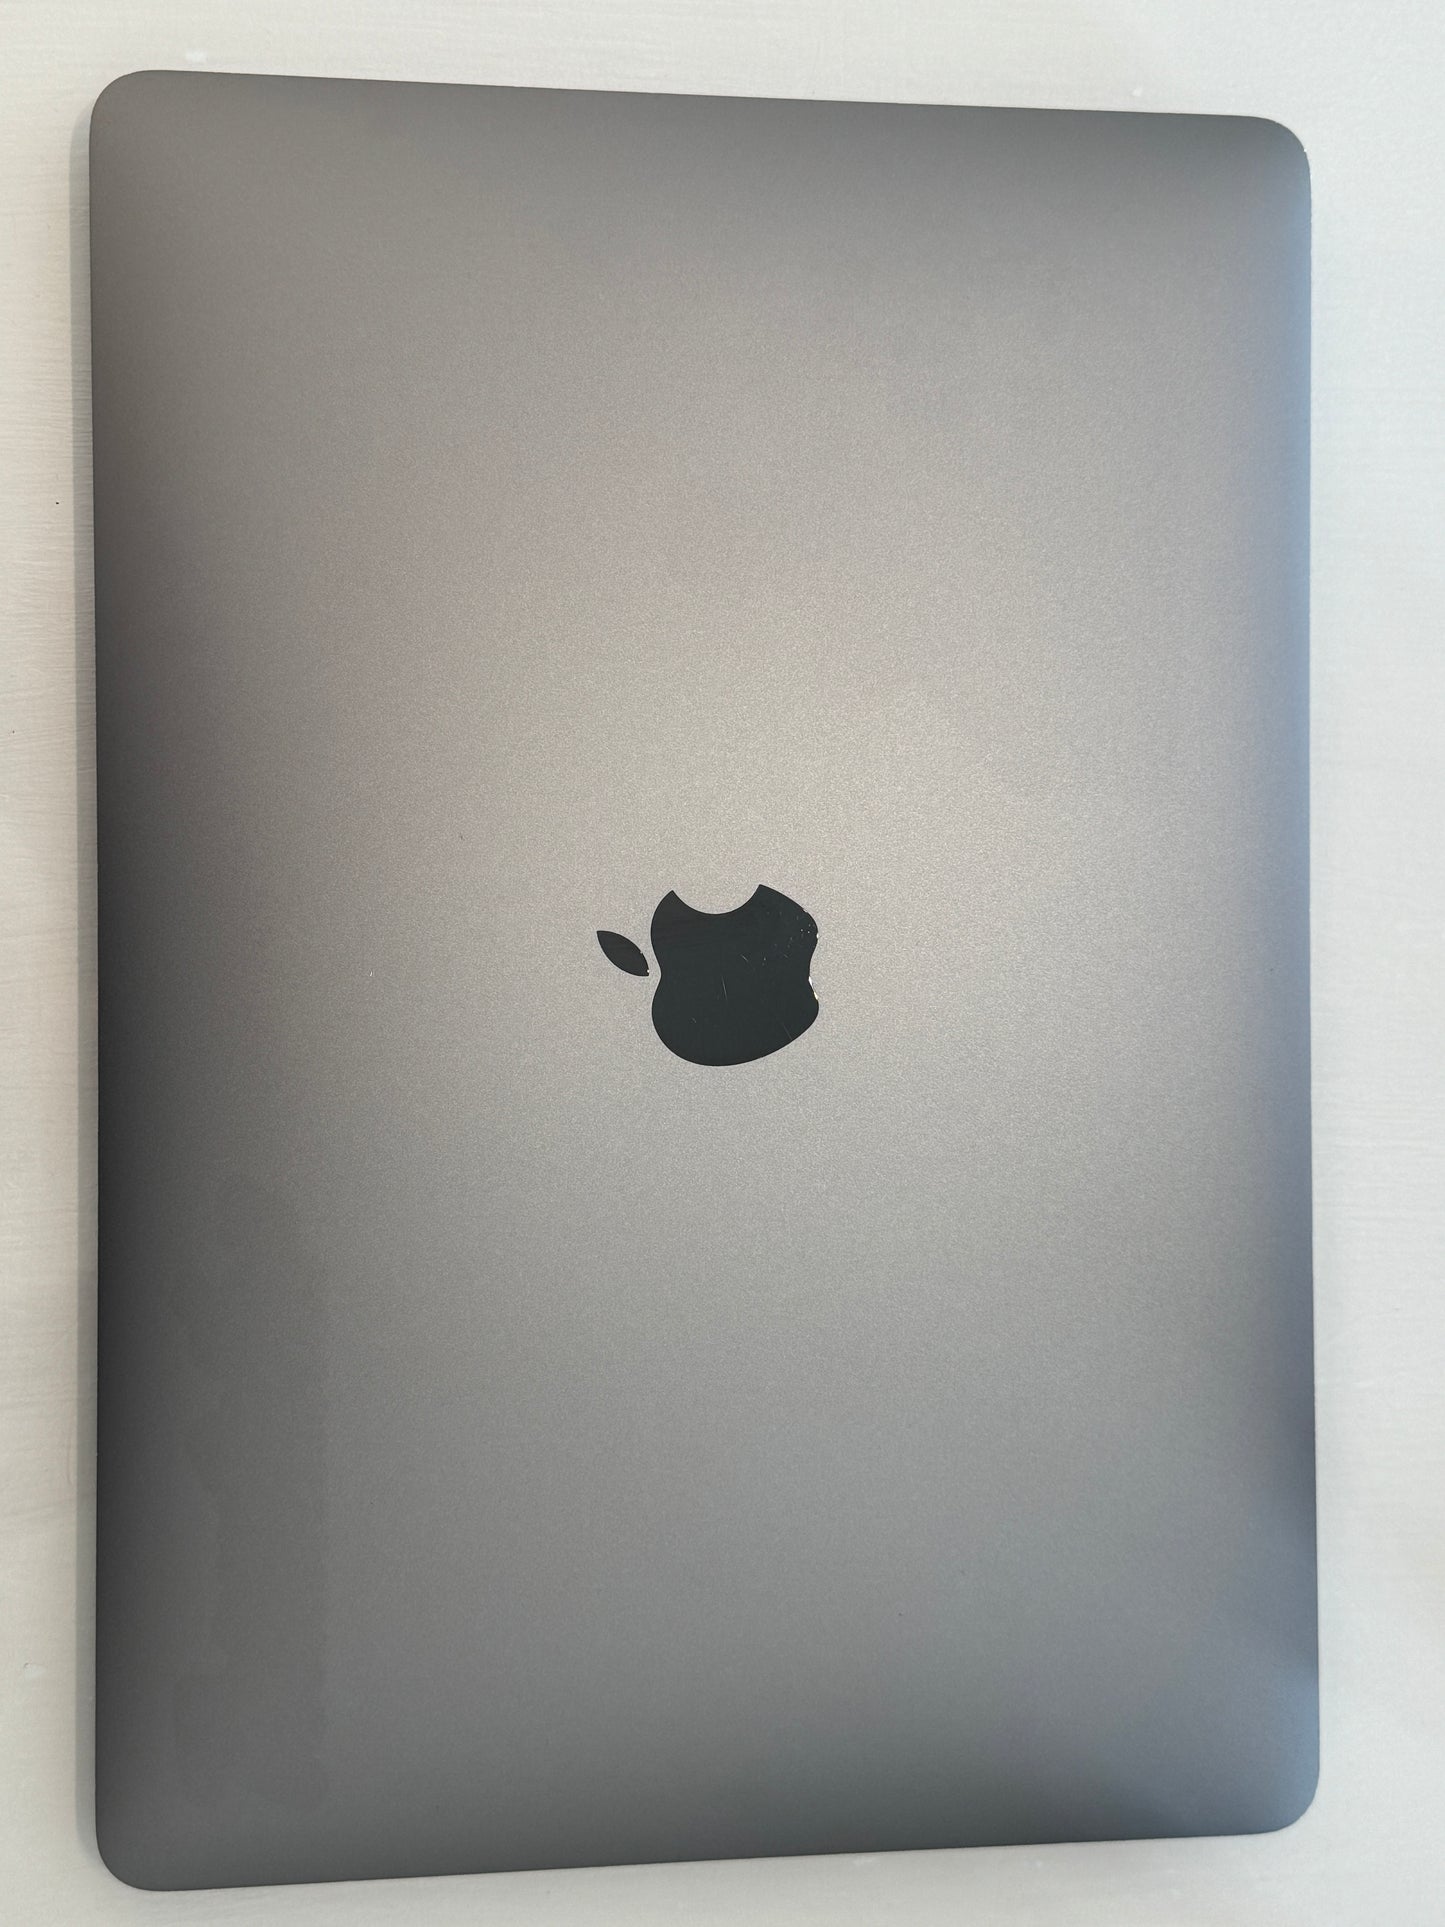 MacBook Air M1 13-inch, 8gb, 256gb (2020)-Space Grey - Grade B